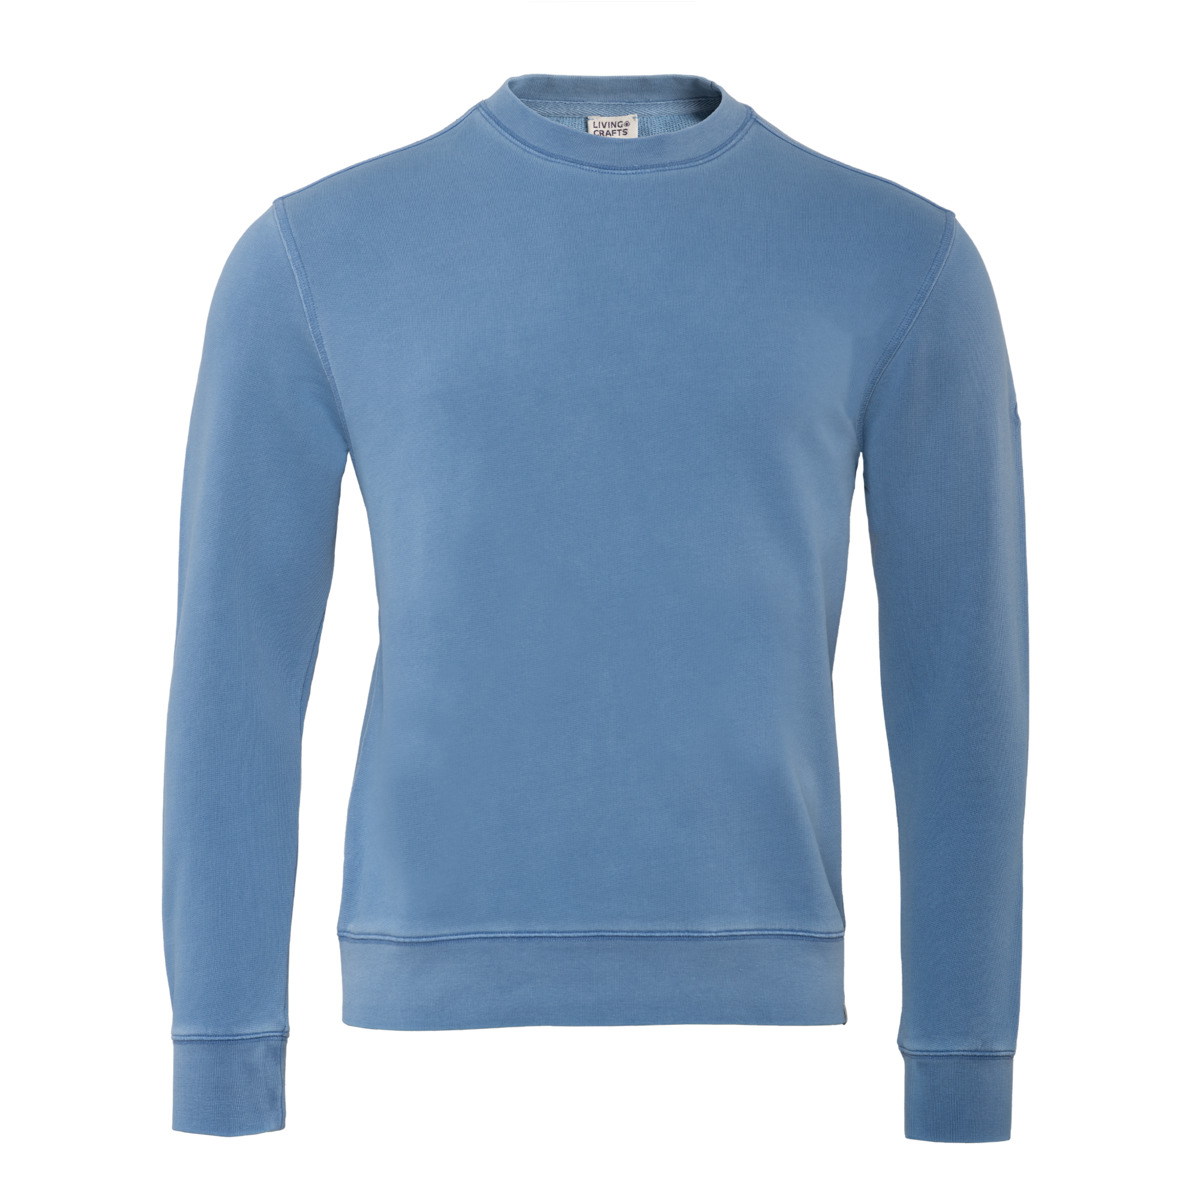 Blue Unisex Sweatshirt, RONNY